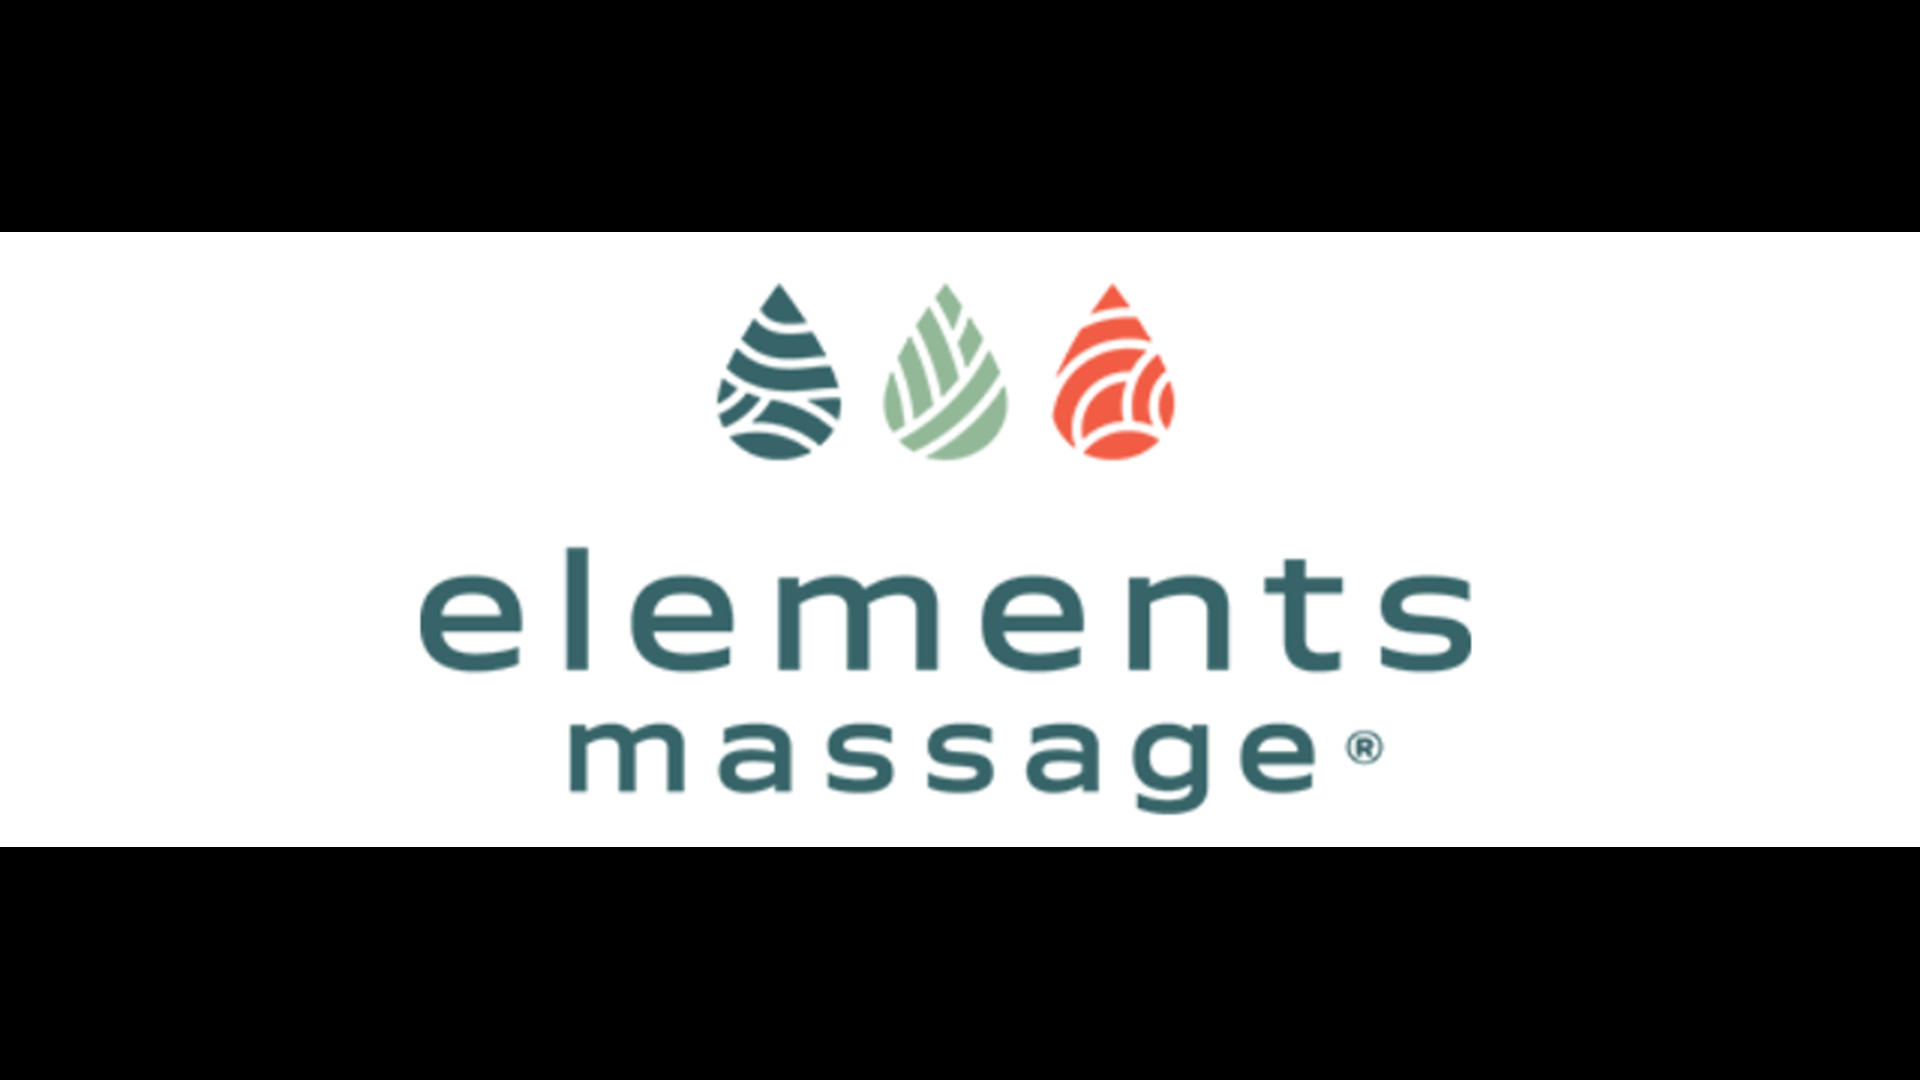 Elements Massage October 29 2020